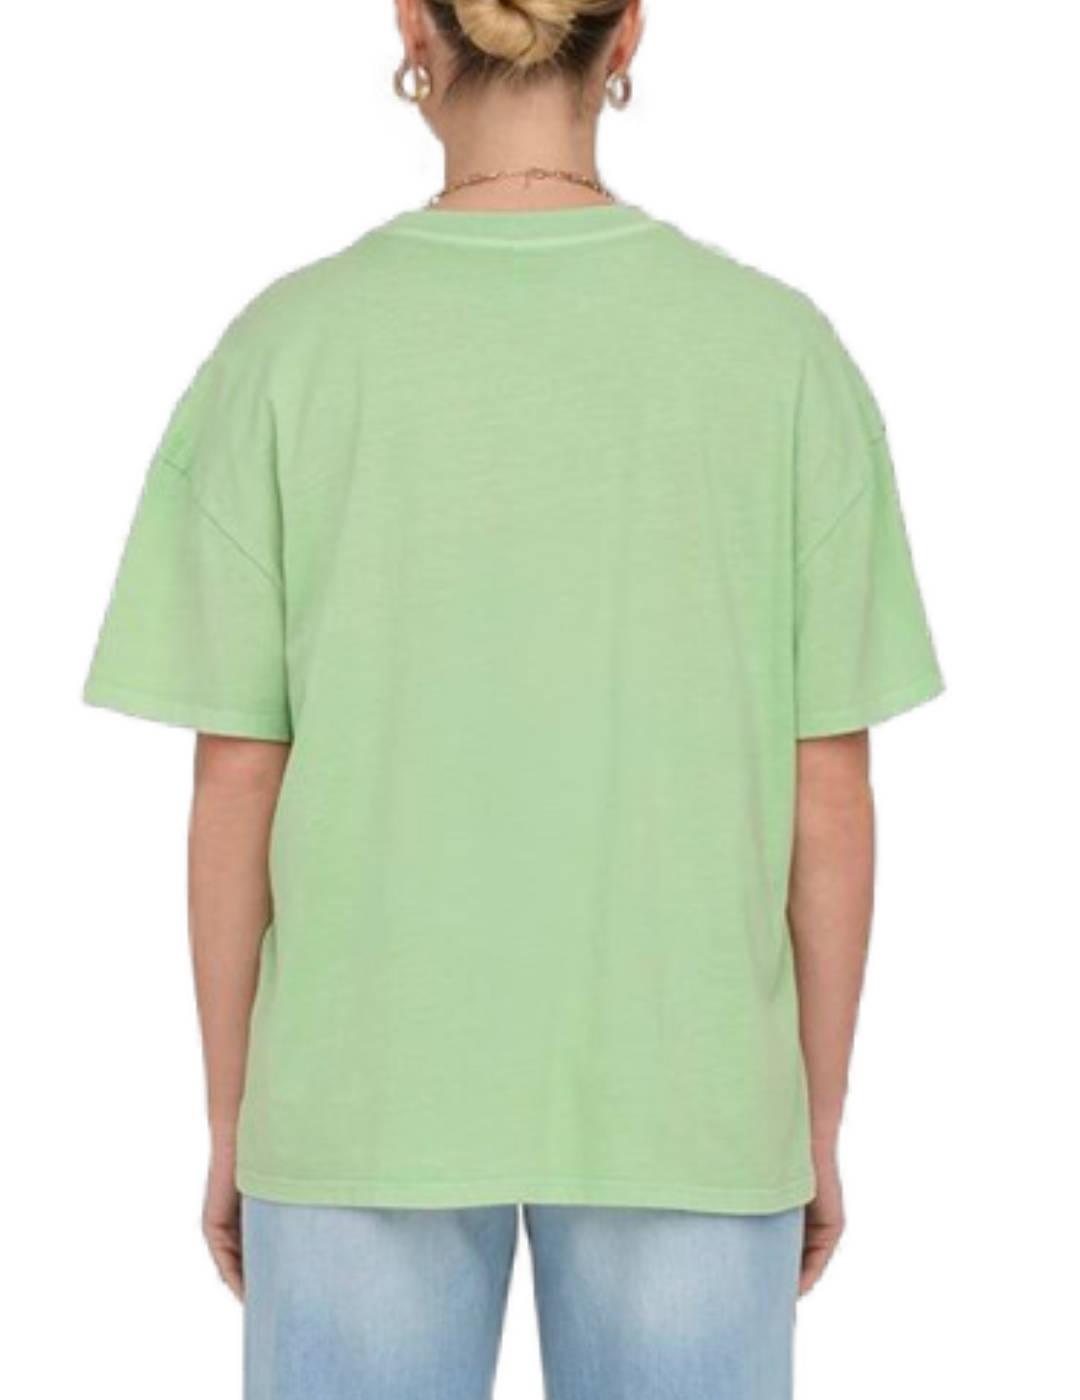 Camiseta Only Rilly verde claro manga corta para mujer